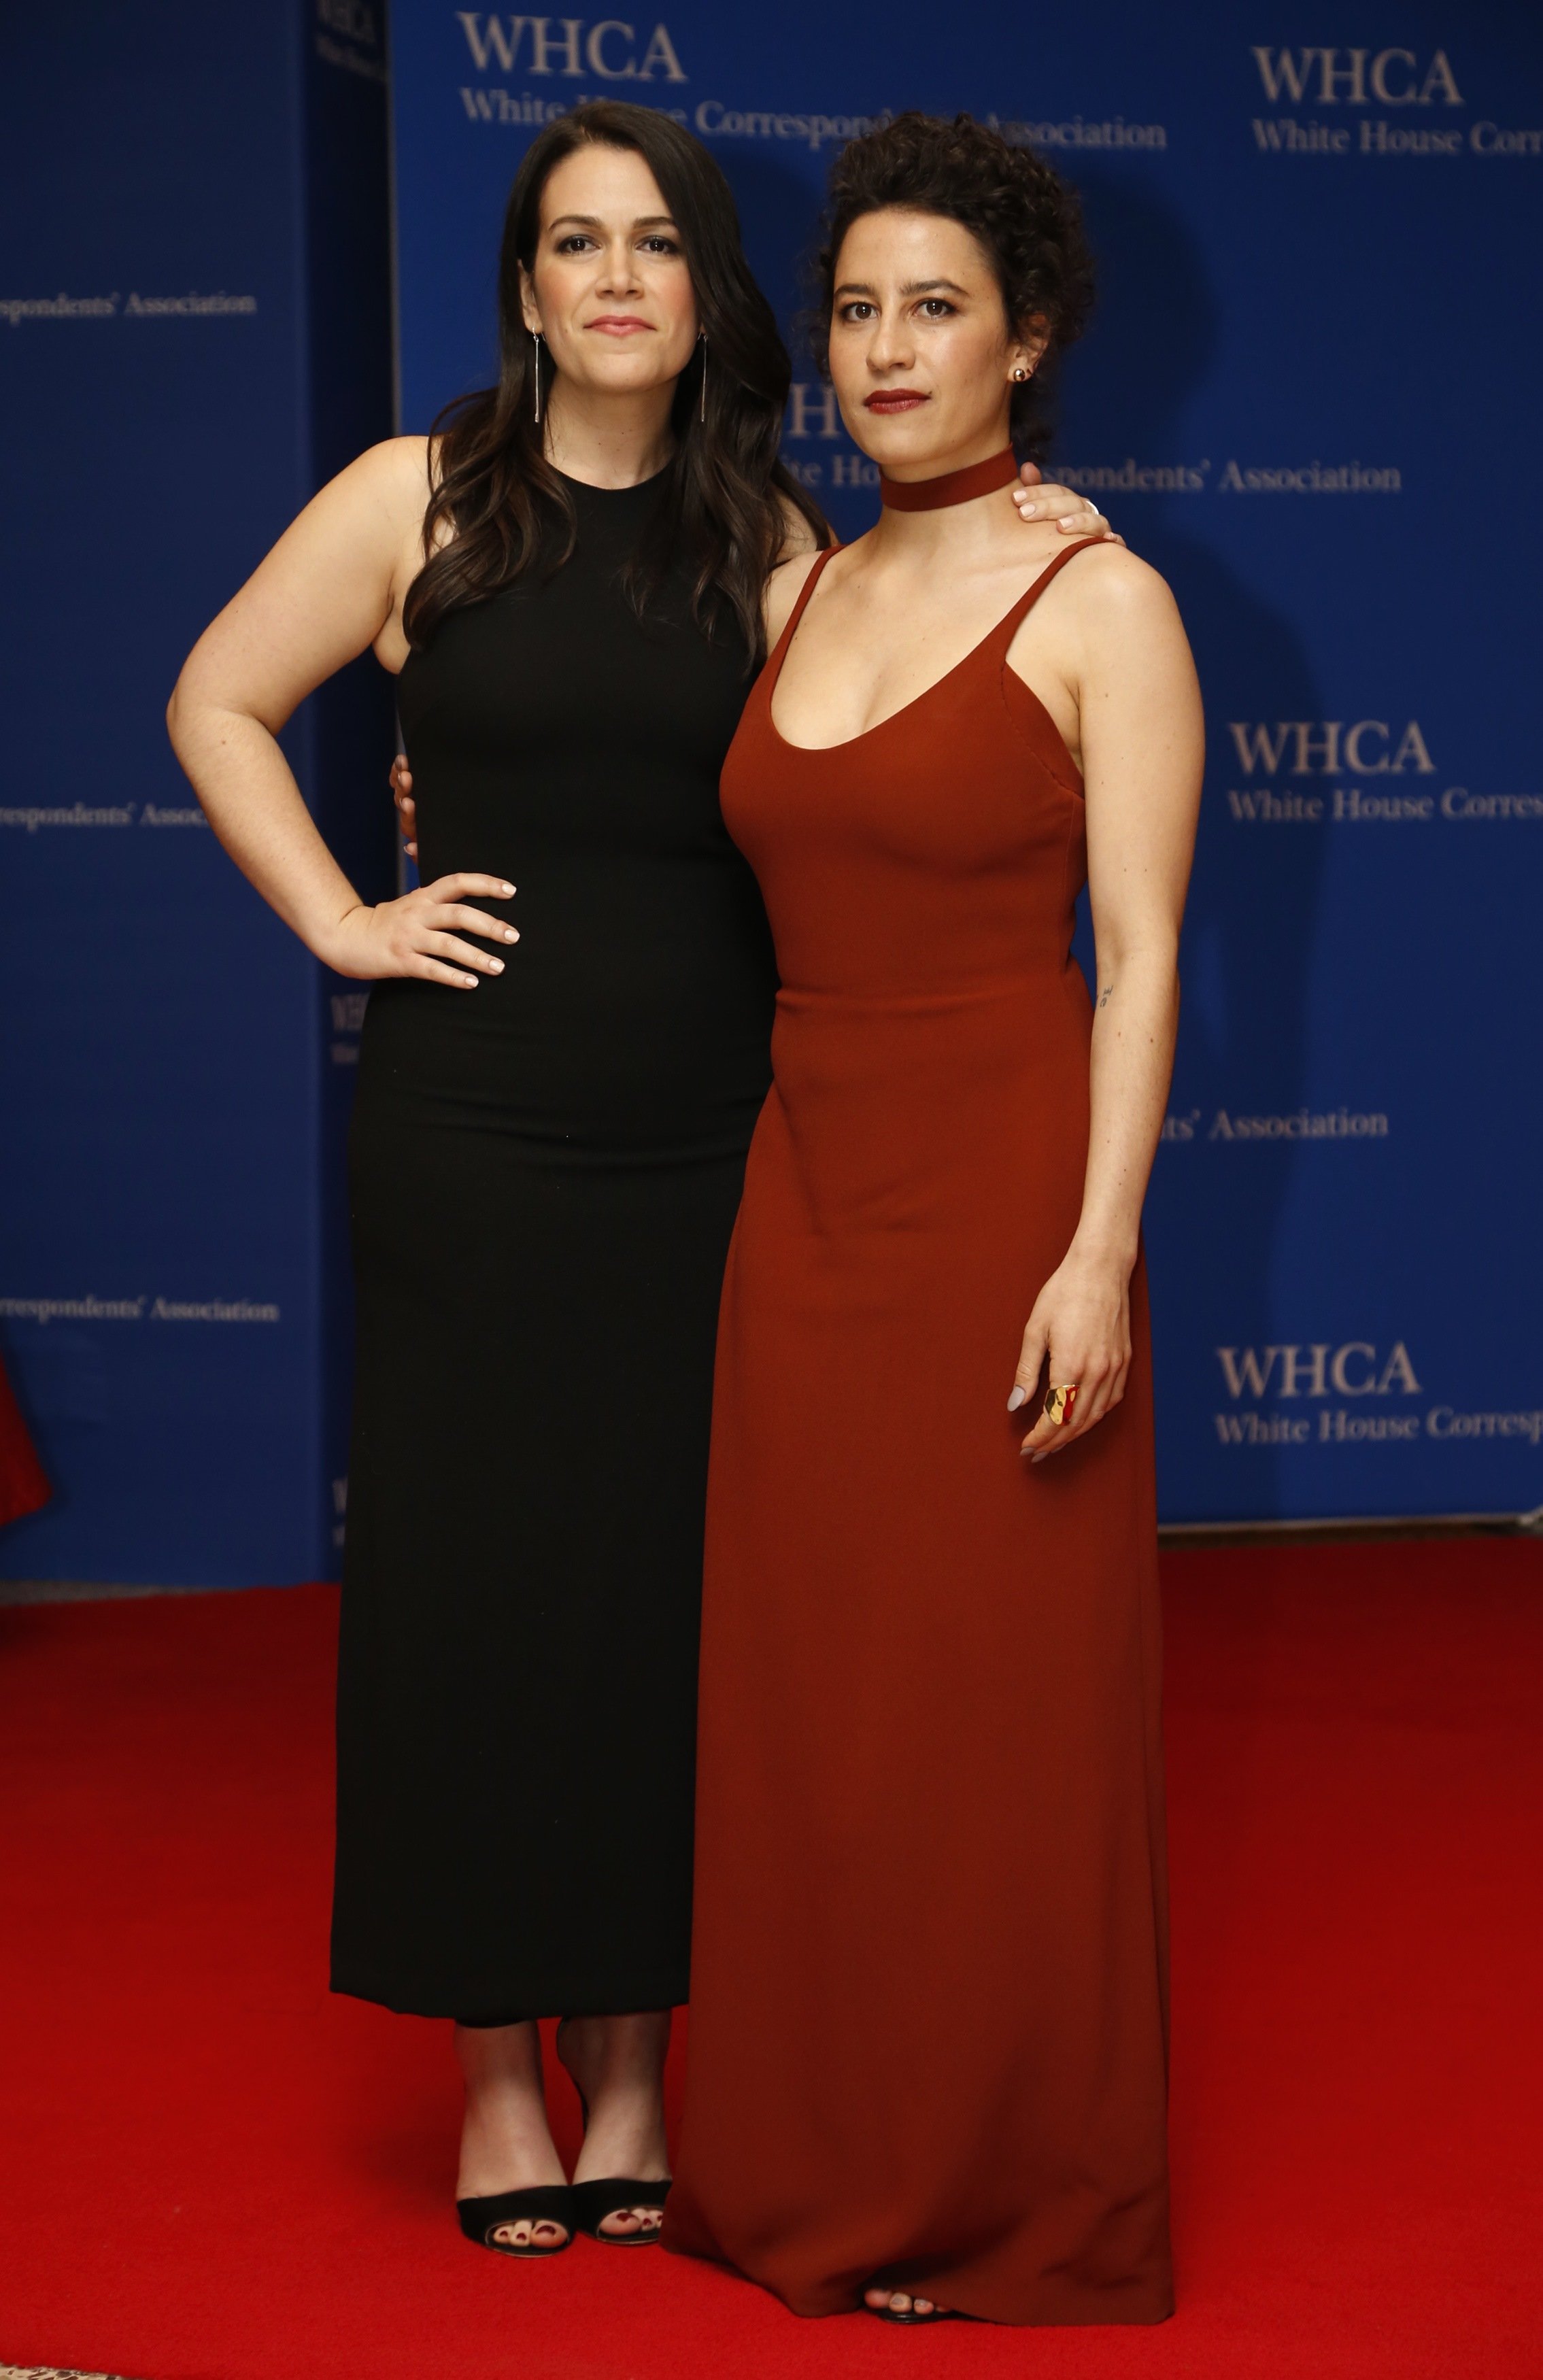 Abbi Jacobson and Llana Glazer attend the White House Correspondents' Association Dinner at the Washington Hilton Hotel in Washington on April 30, 2016.